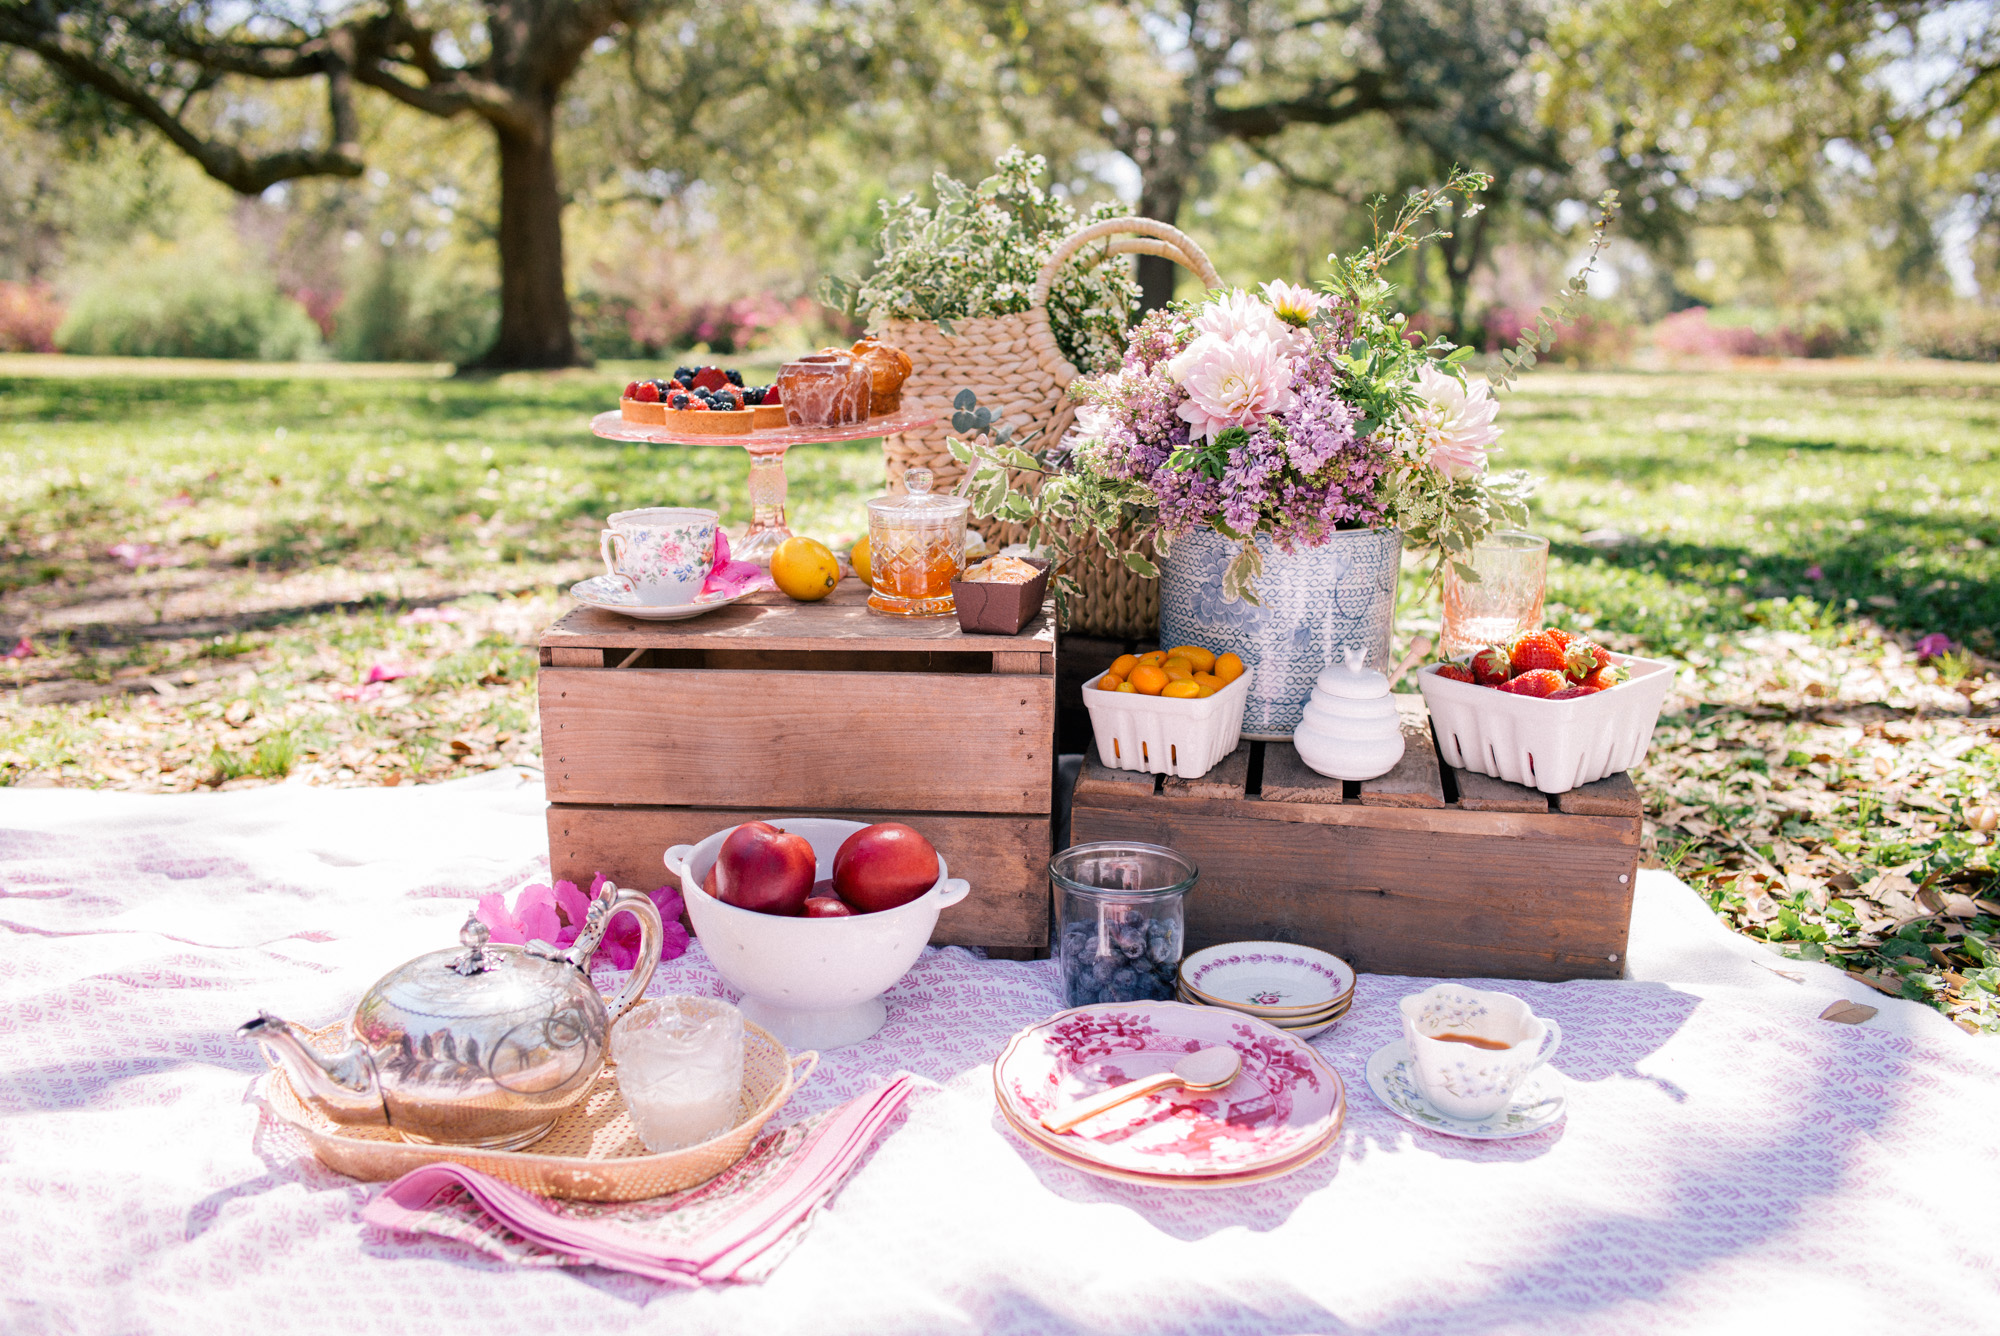 gmg-picnic-tea-party-1000558